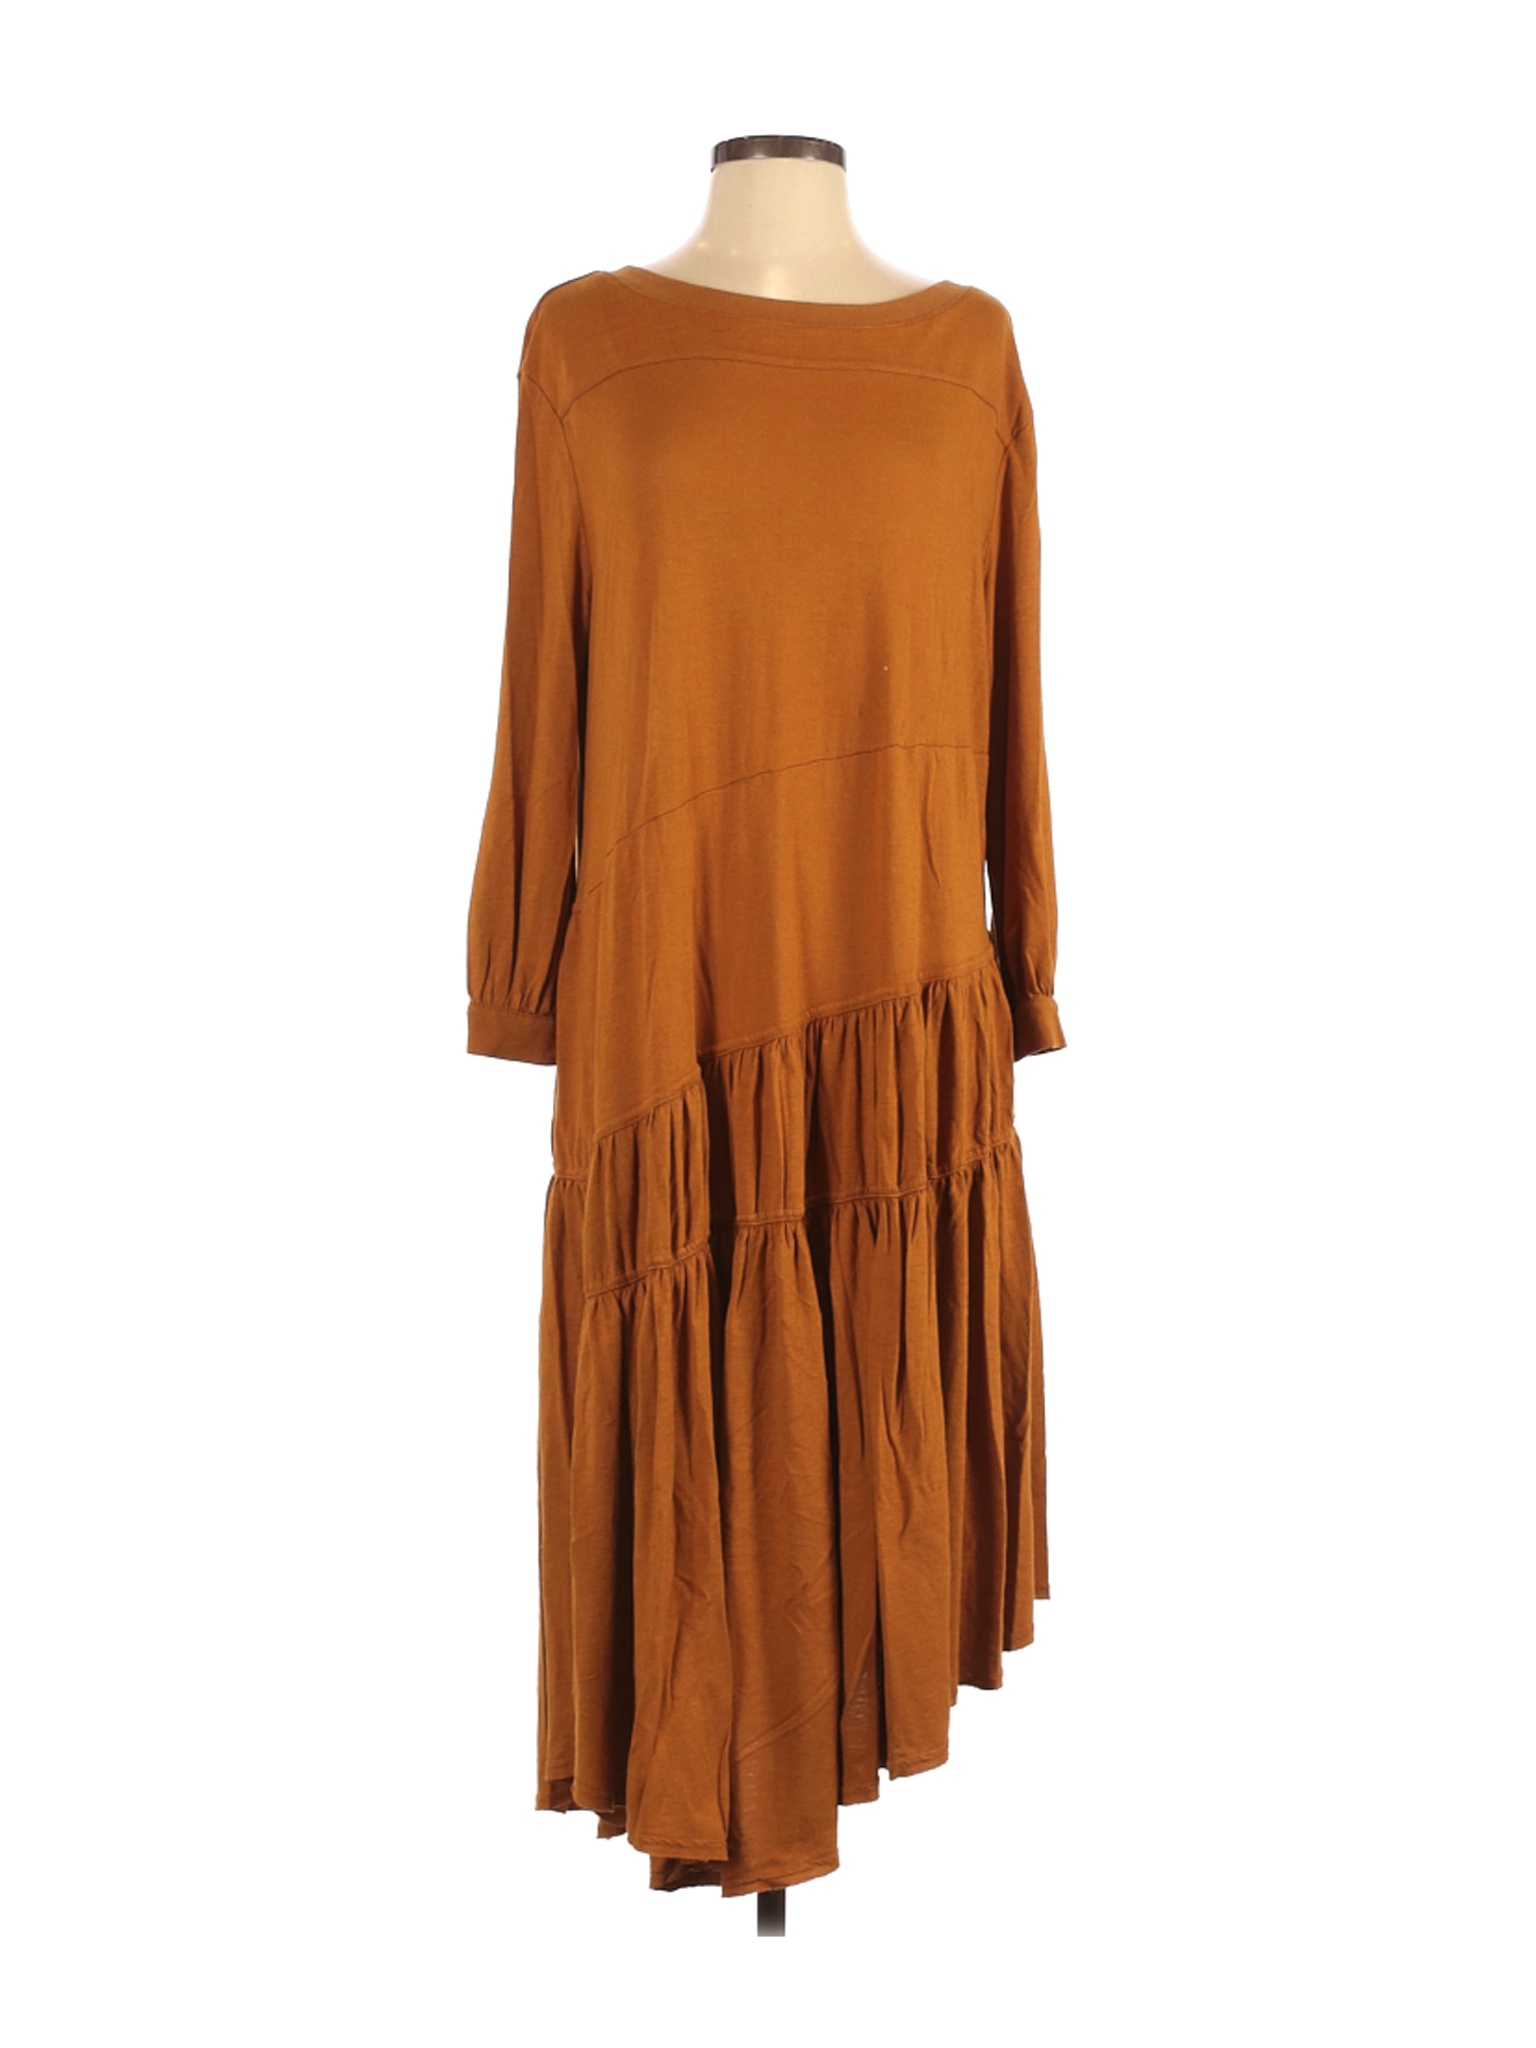 FP BEACH Women Brown Casual Dress P | eBay